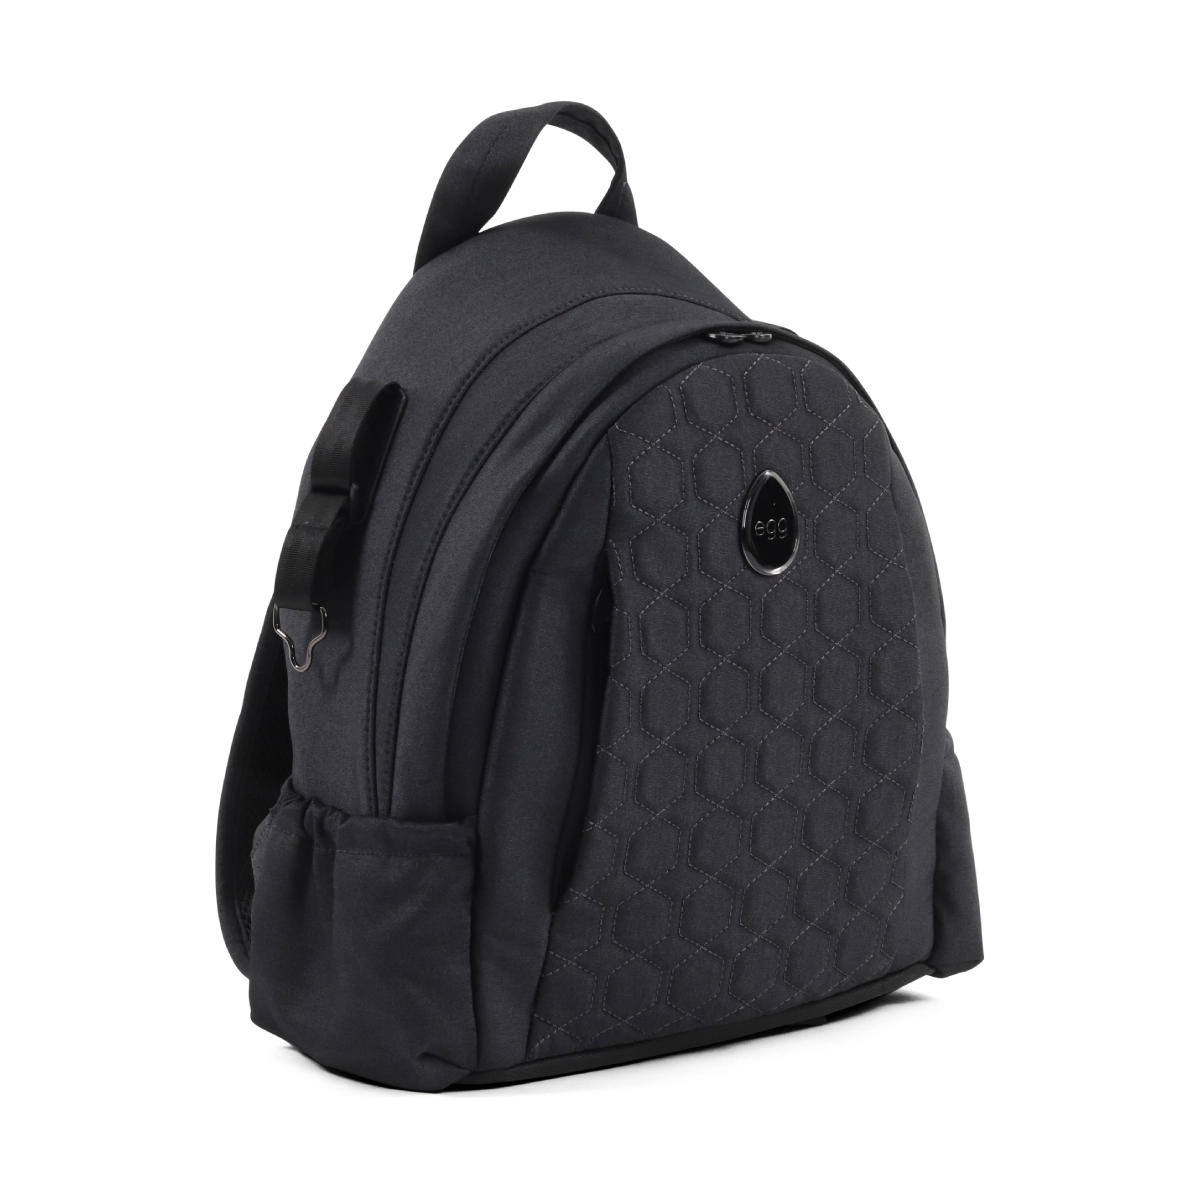 egg® 3 Backpack